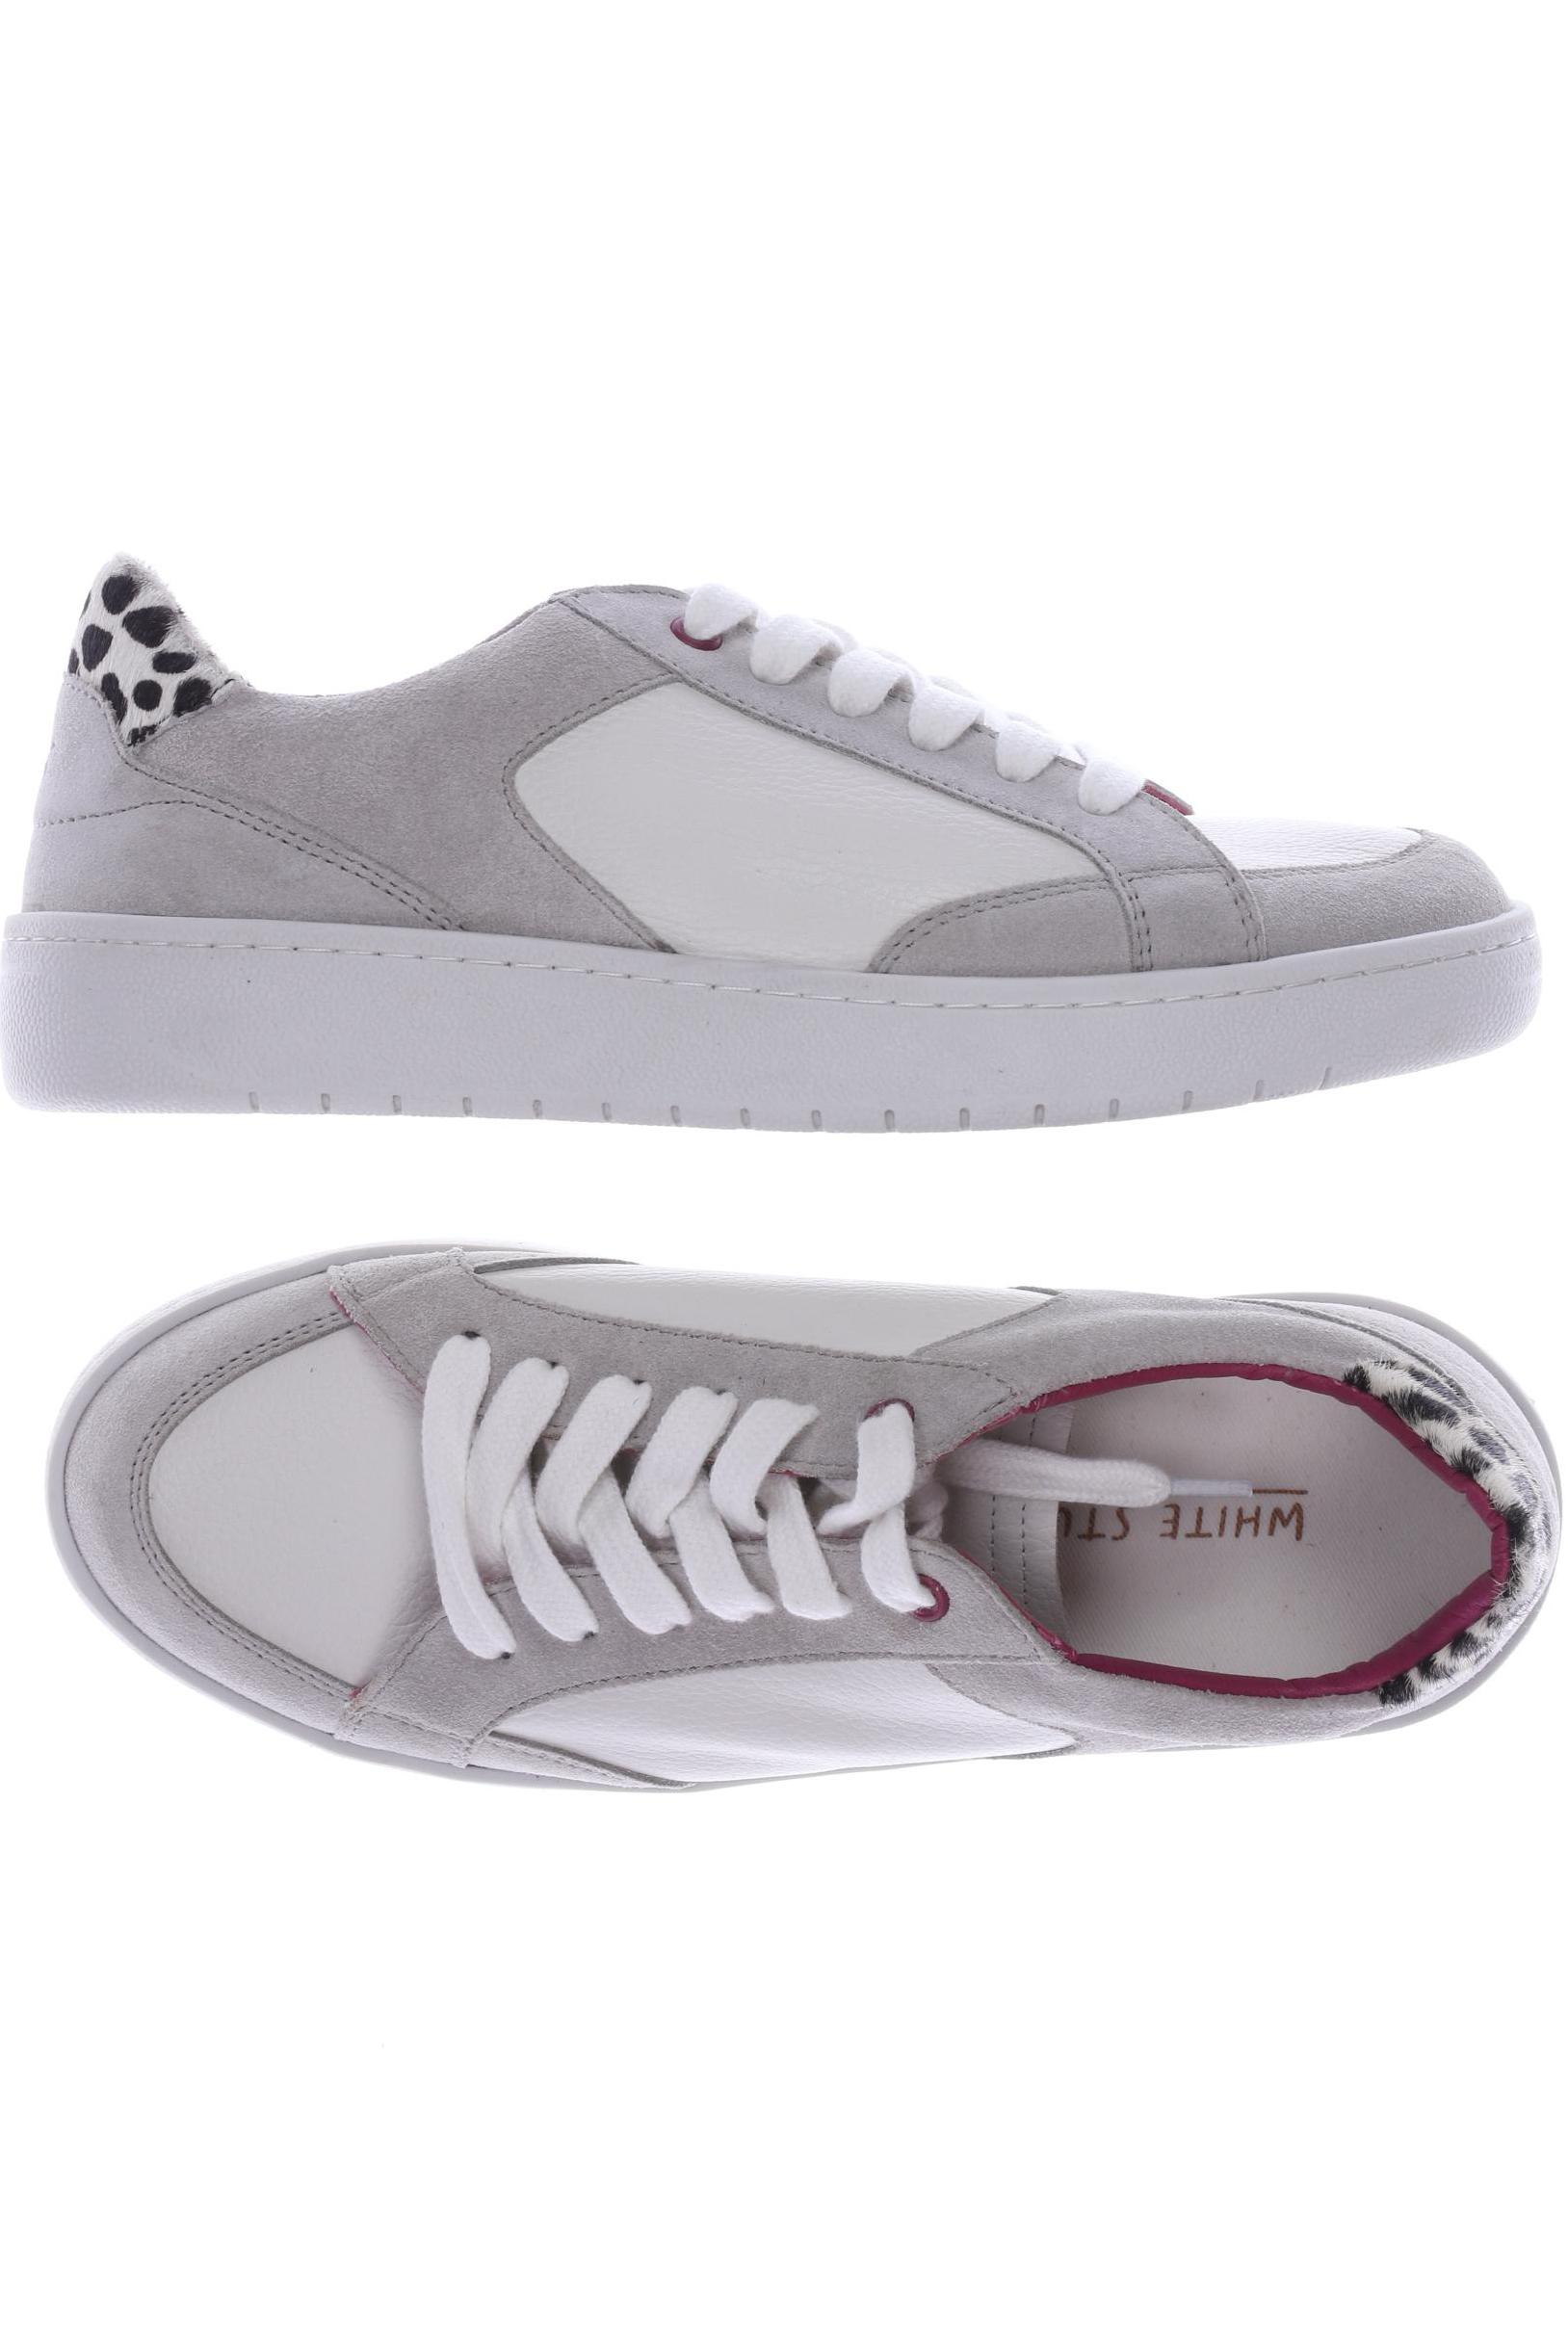 White Stuff Damen Sneakers, grau von White Stuff